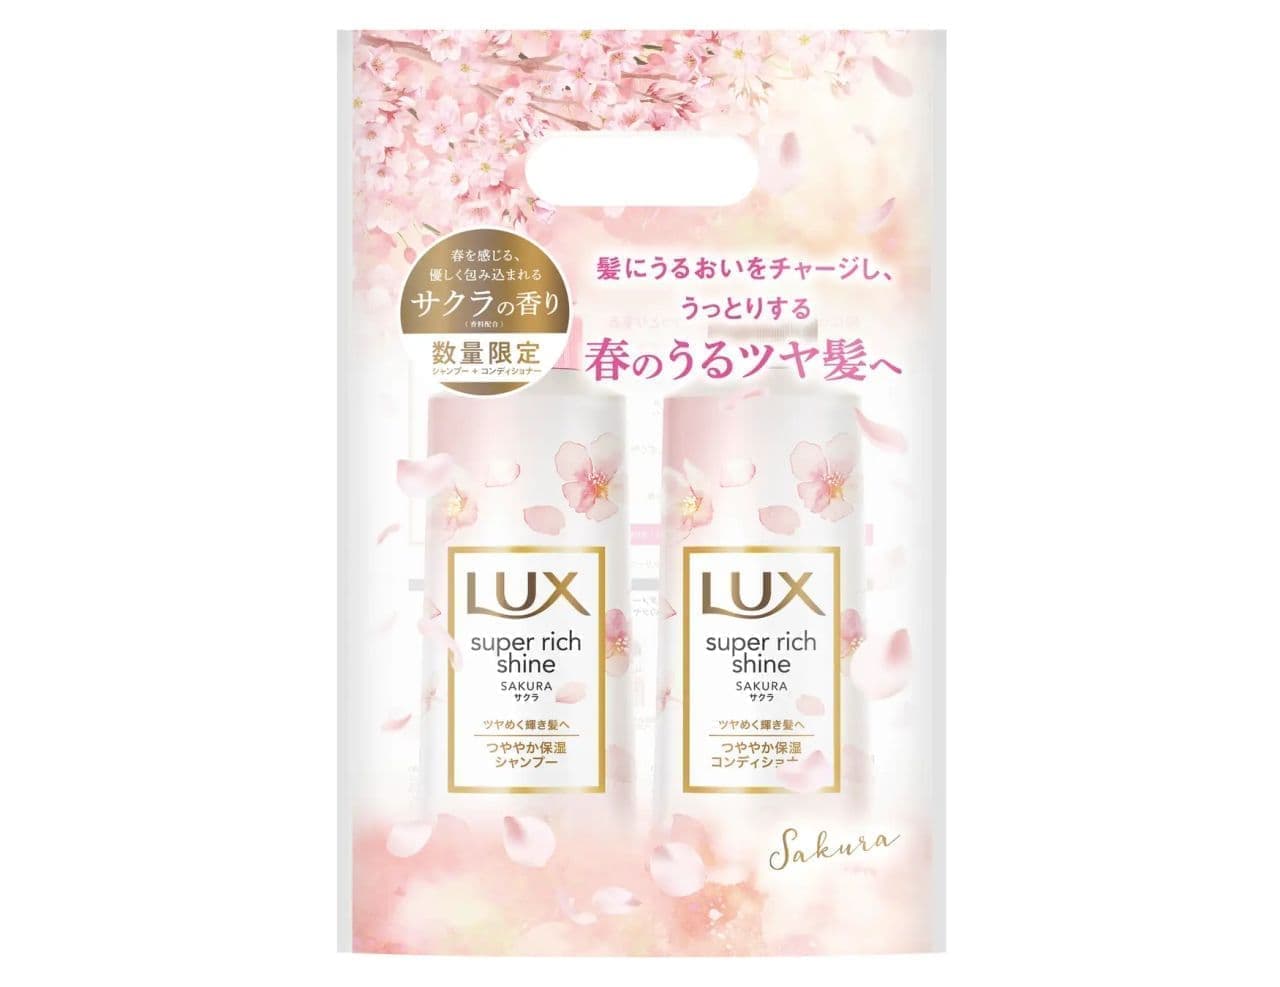 LUX Sakura series